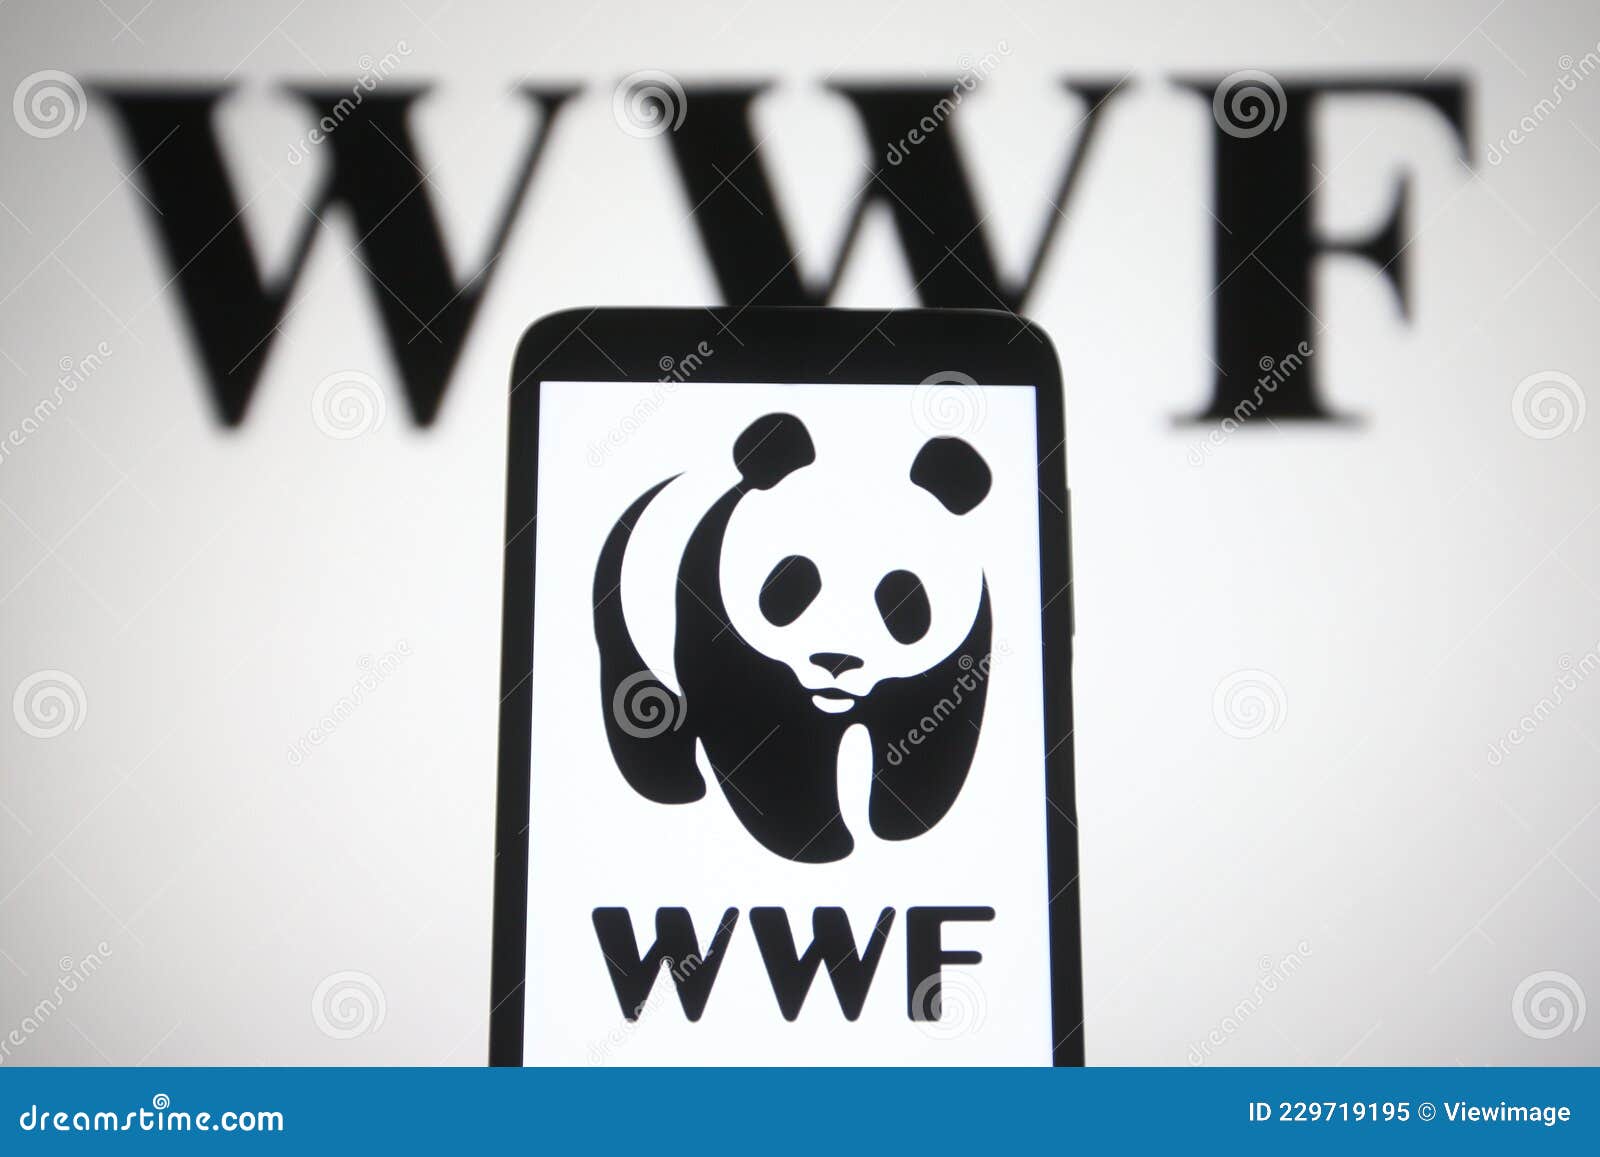 Wide for WWF Logo Editorial Image - Image black, world: 229719195